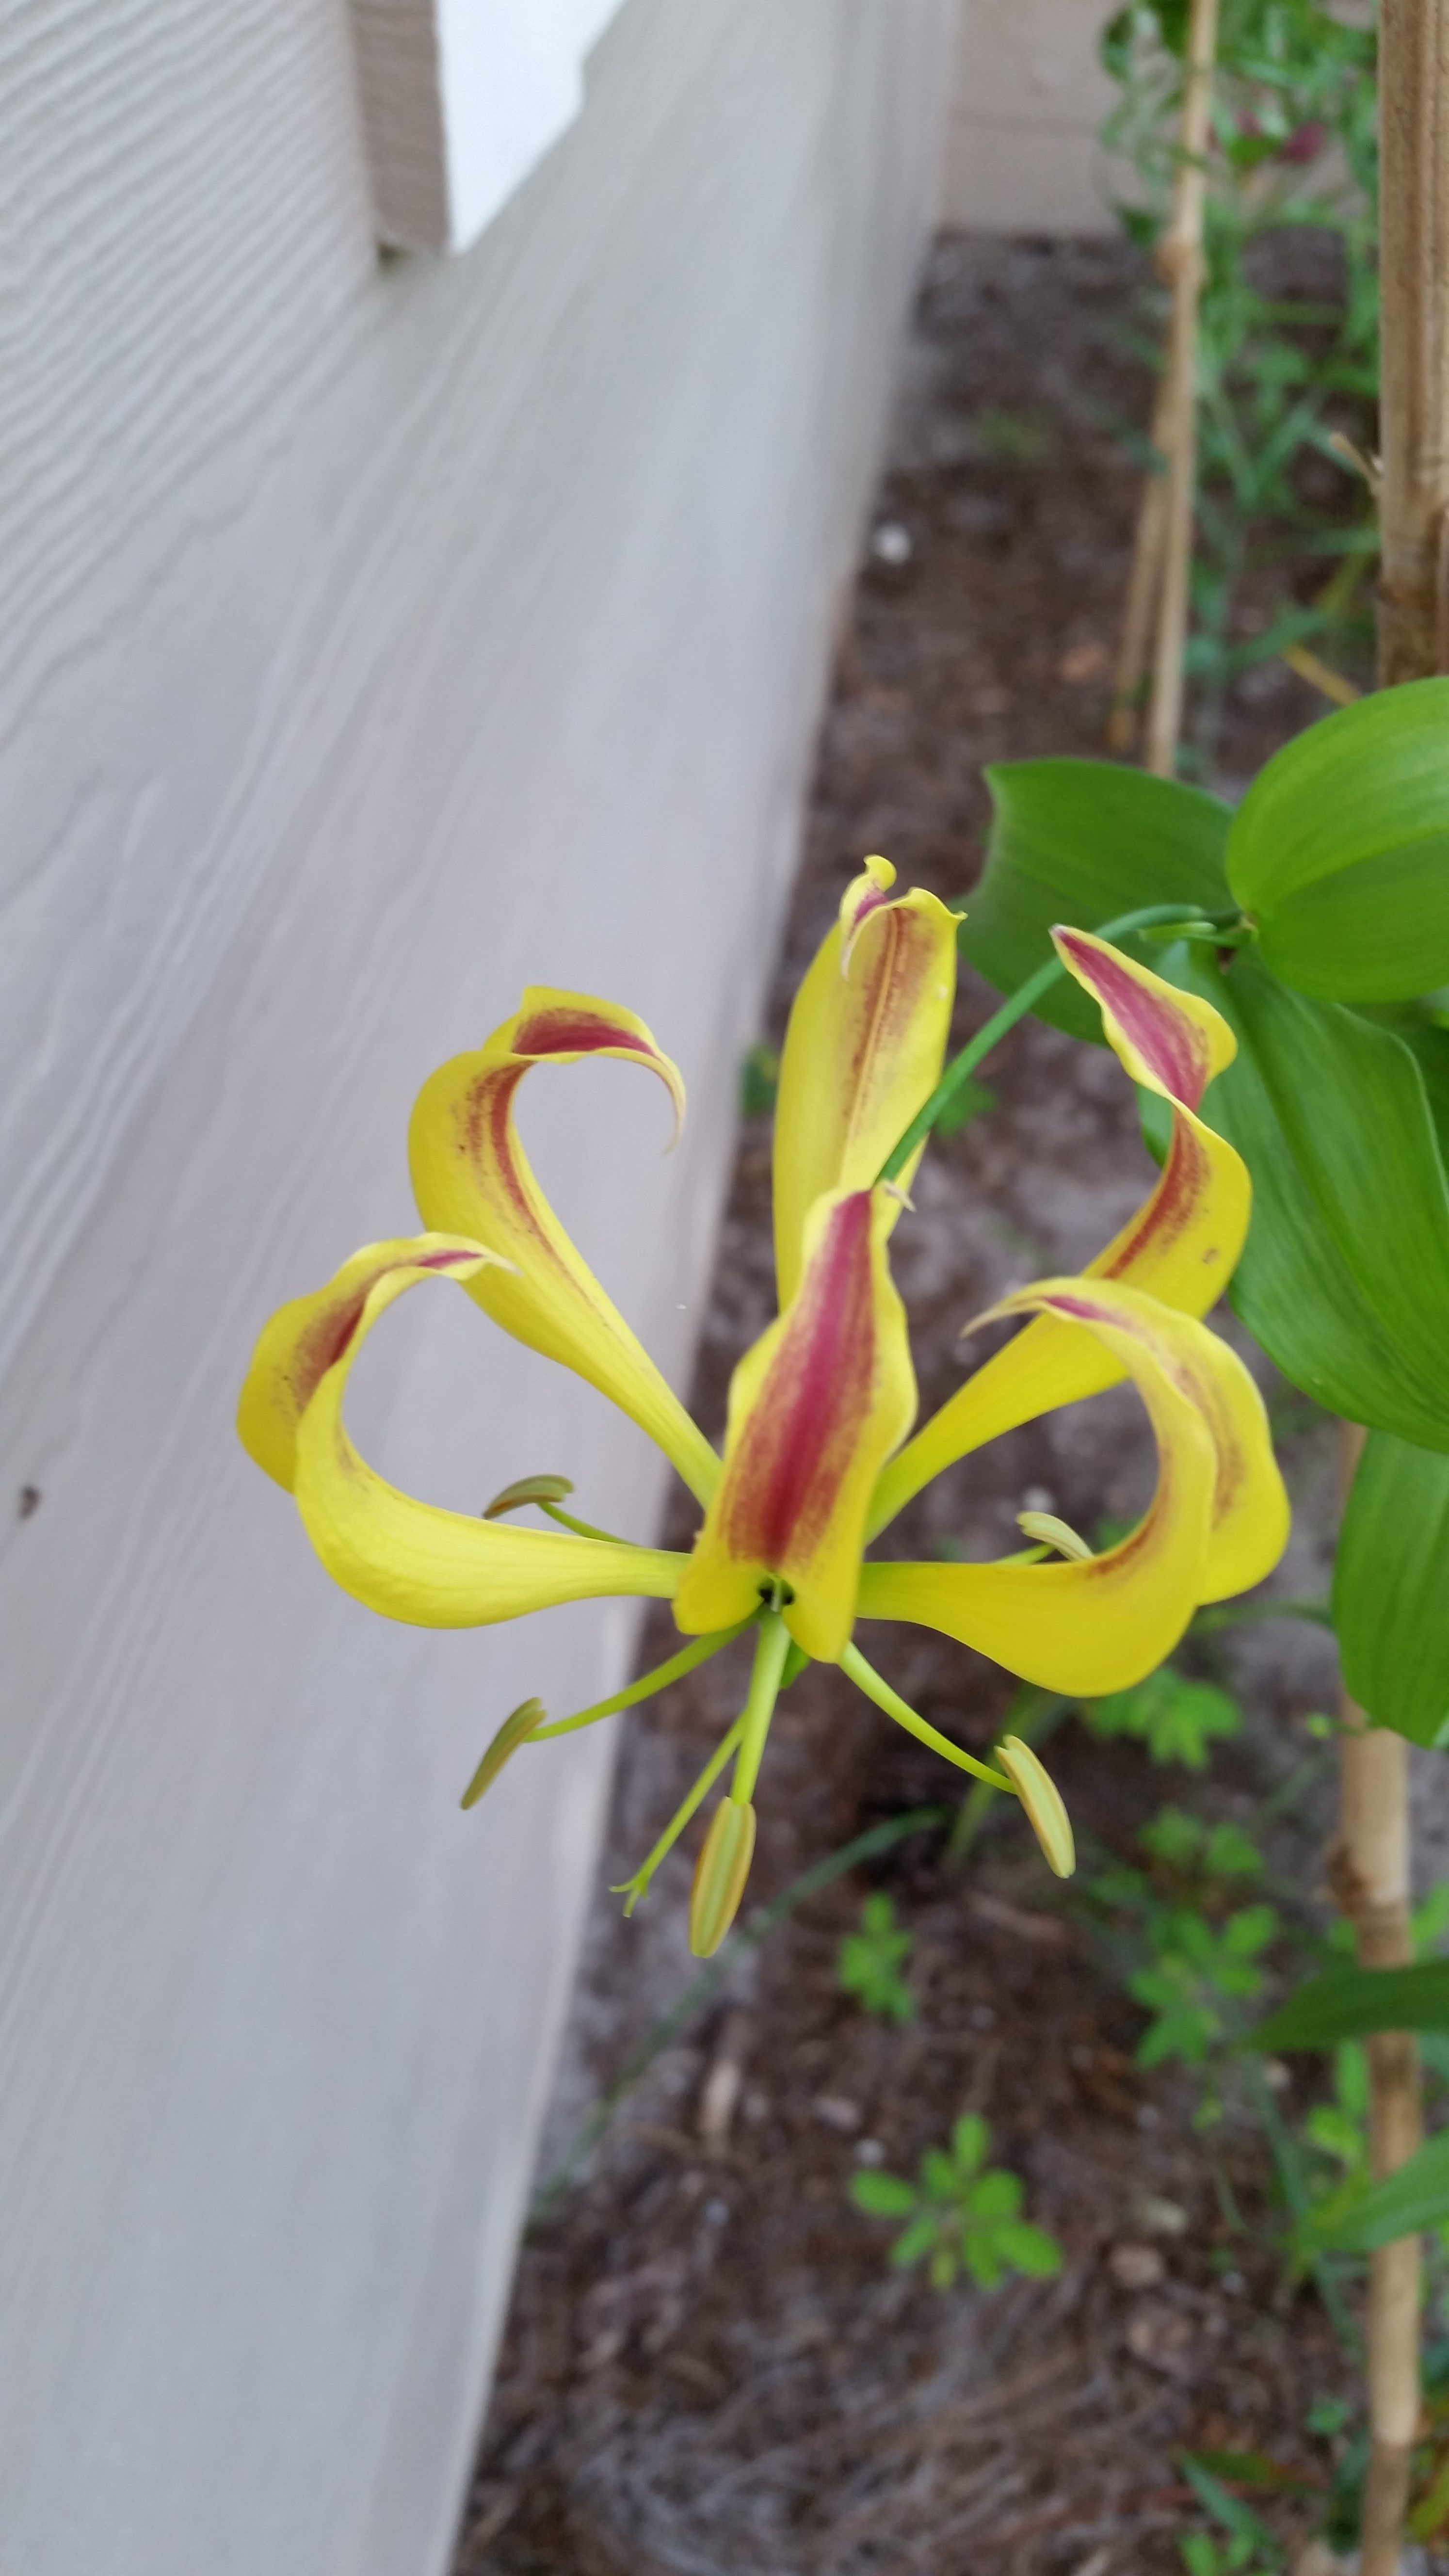 gloriosa lily, hydrid